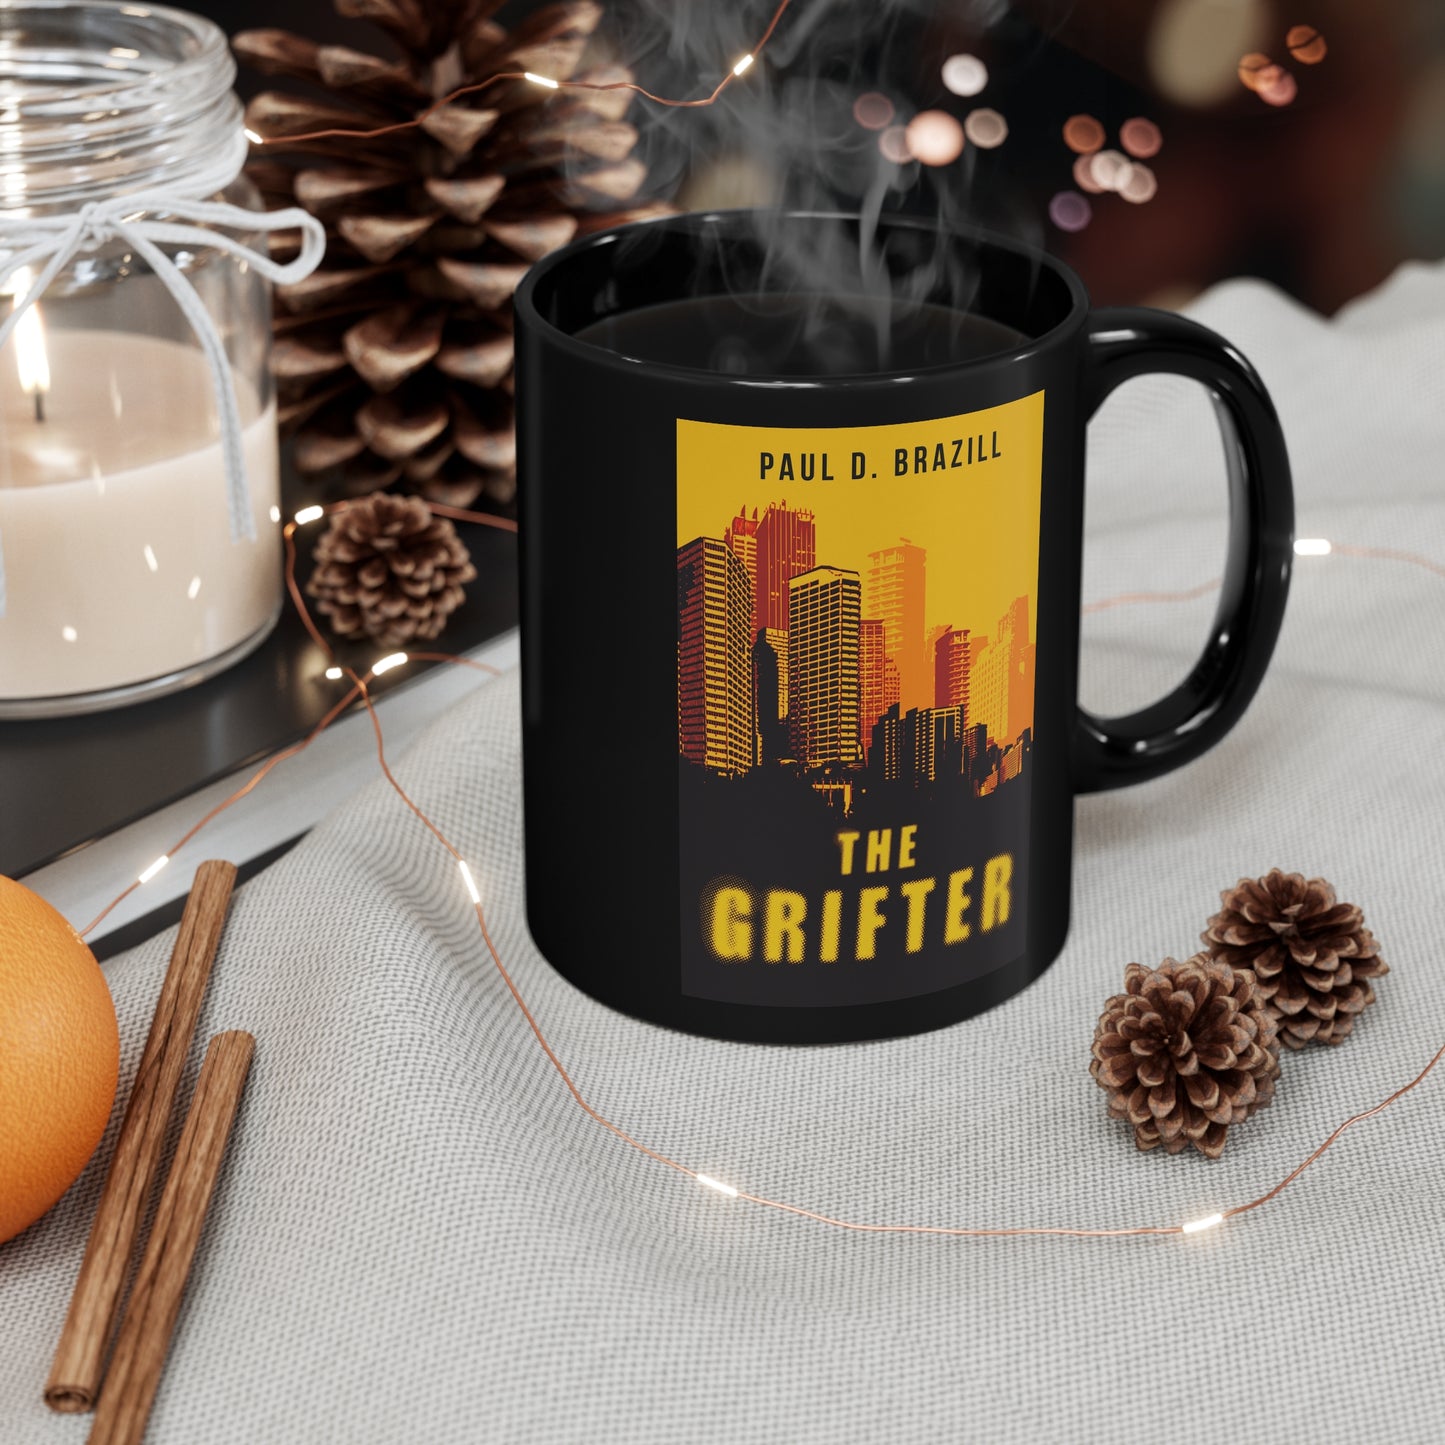 The Grifter - Black Coffee Mug